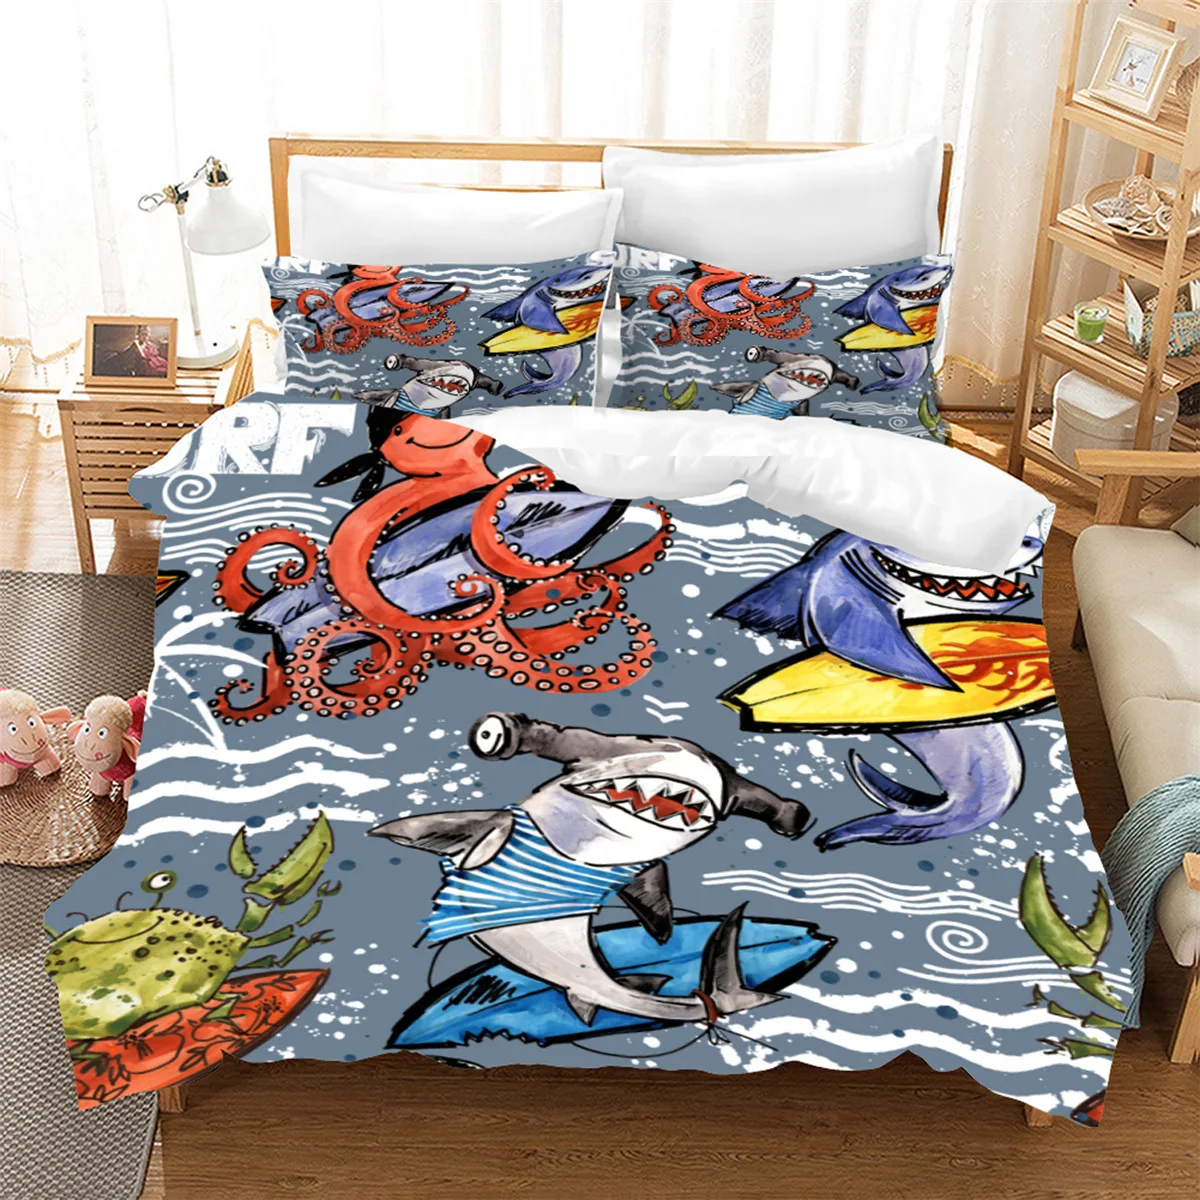 

Bedding Set for Kids Teens Boy,Underwater Sea Comforter Cover Shark Fish Duvet Cover King/Queen Size,Hawaiian Ocean Animal Theme